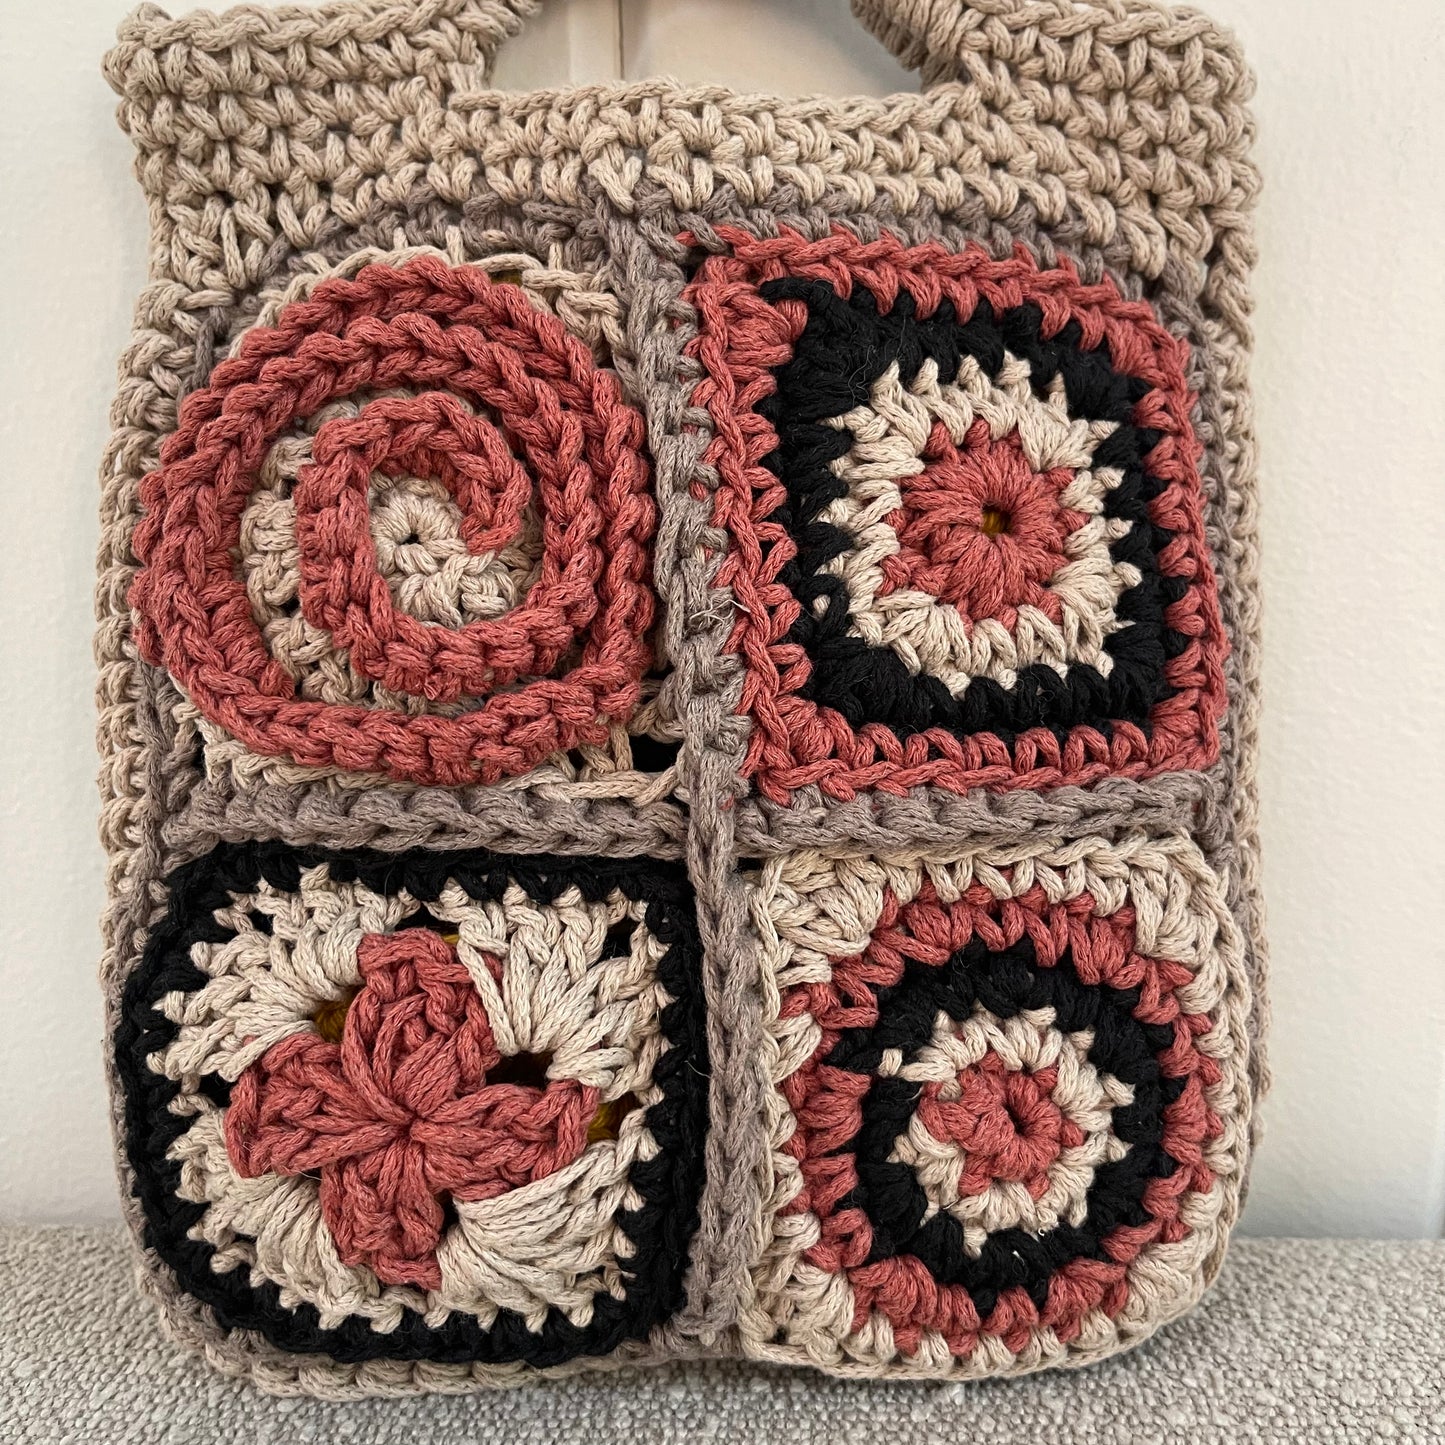 Close up photo of a crocheted granny square handbag in tan, grey, black and brick red. 